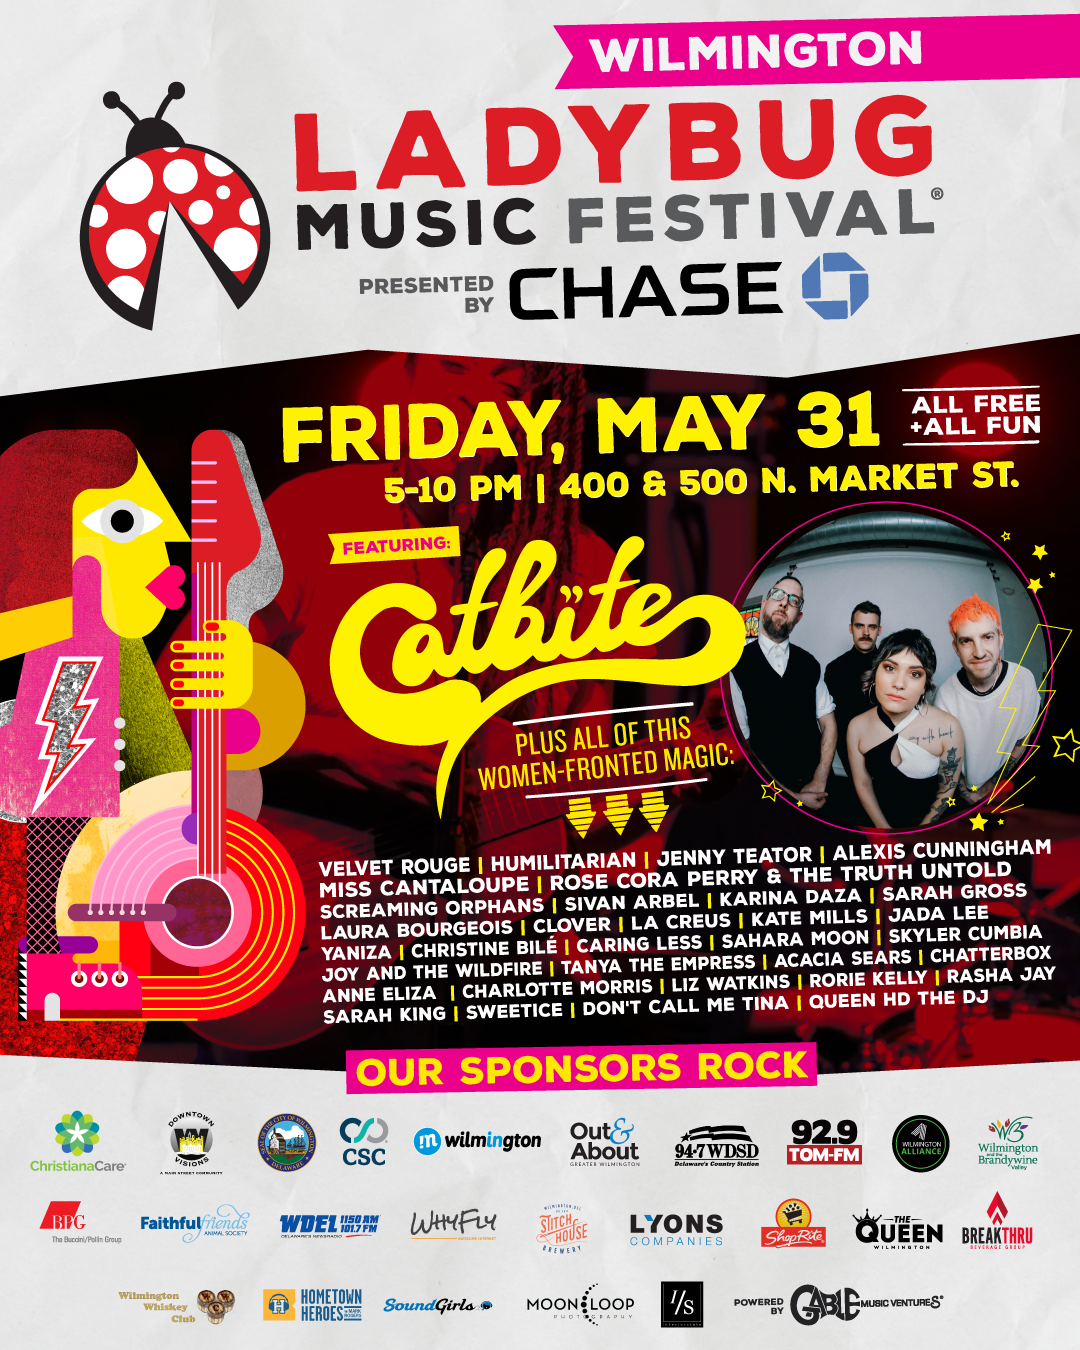 El Festival de Música Ladybug regresa a Wilmington